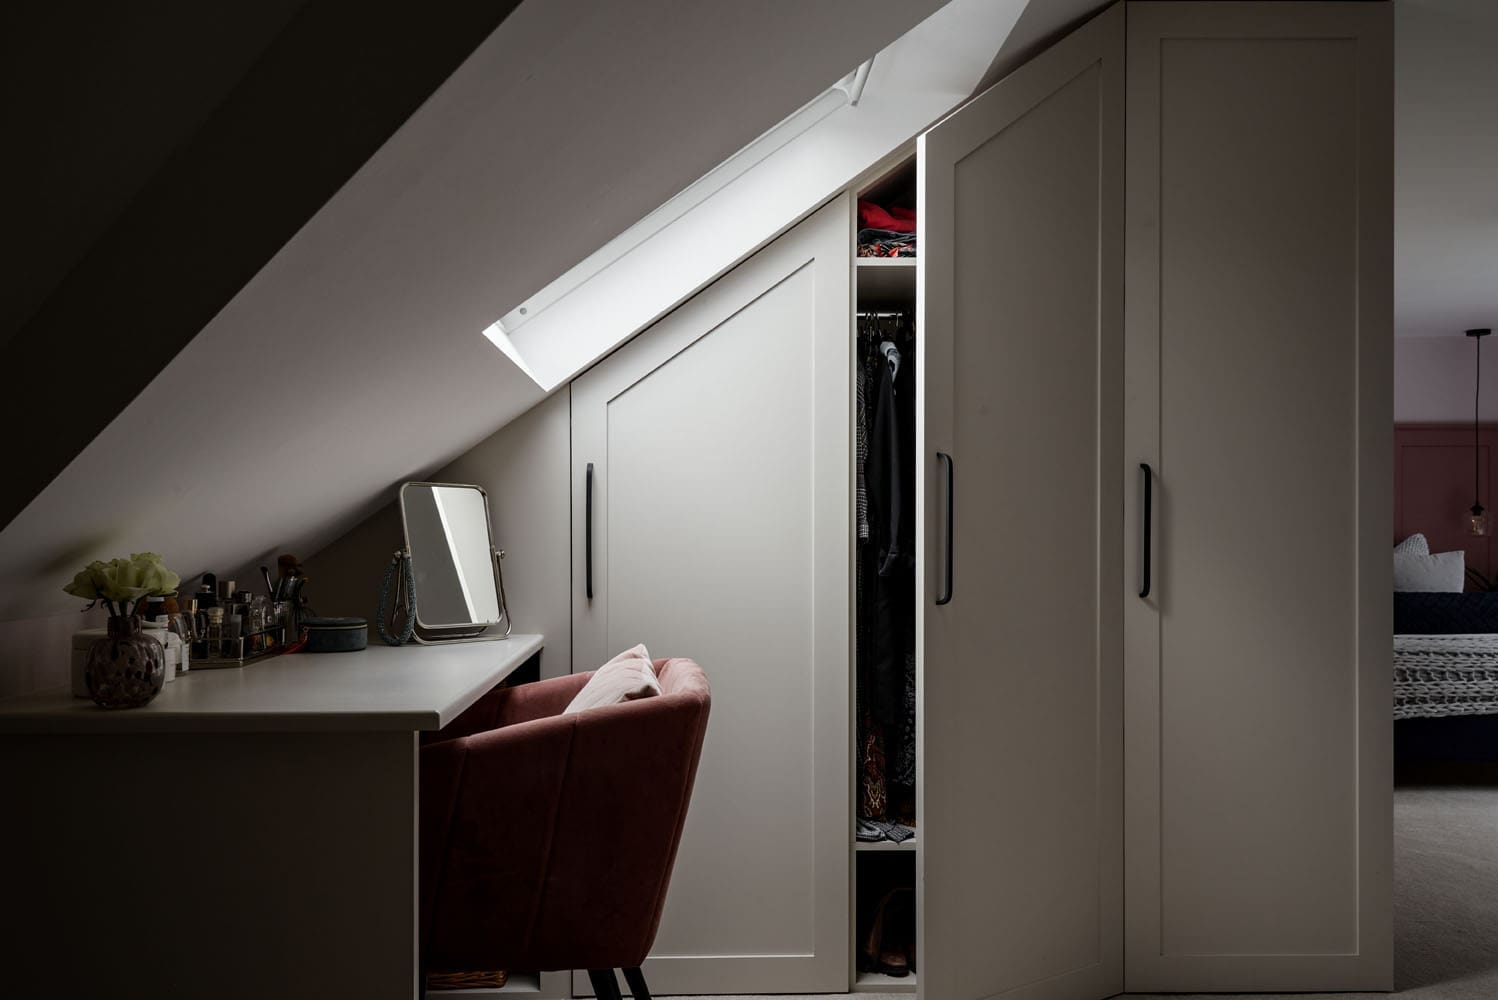 rear dormer with skylight window bring light over custom wardrobe storage